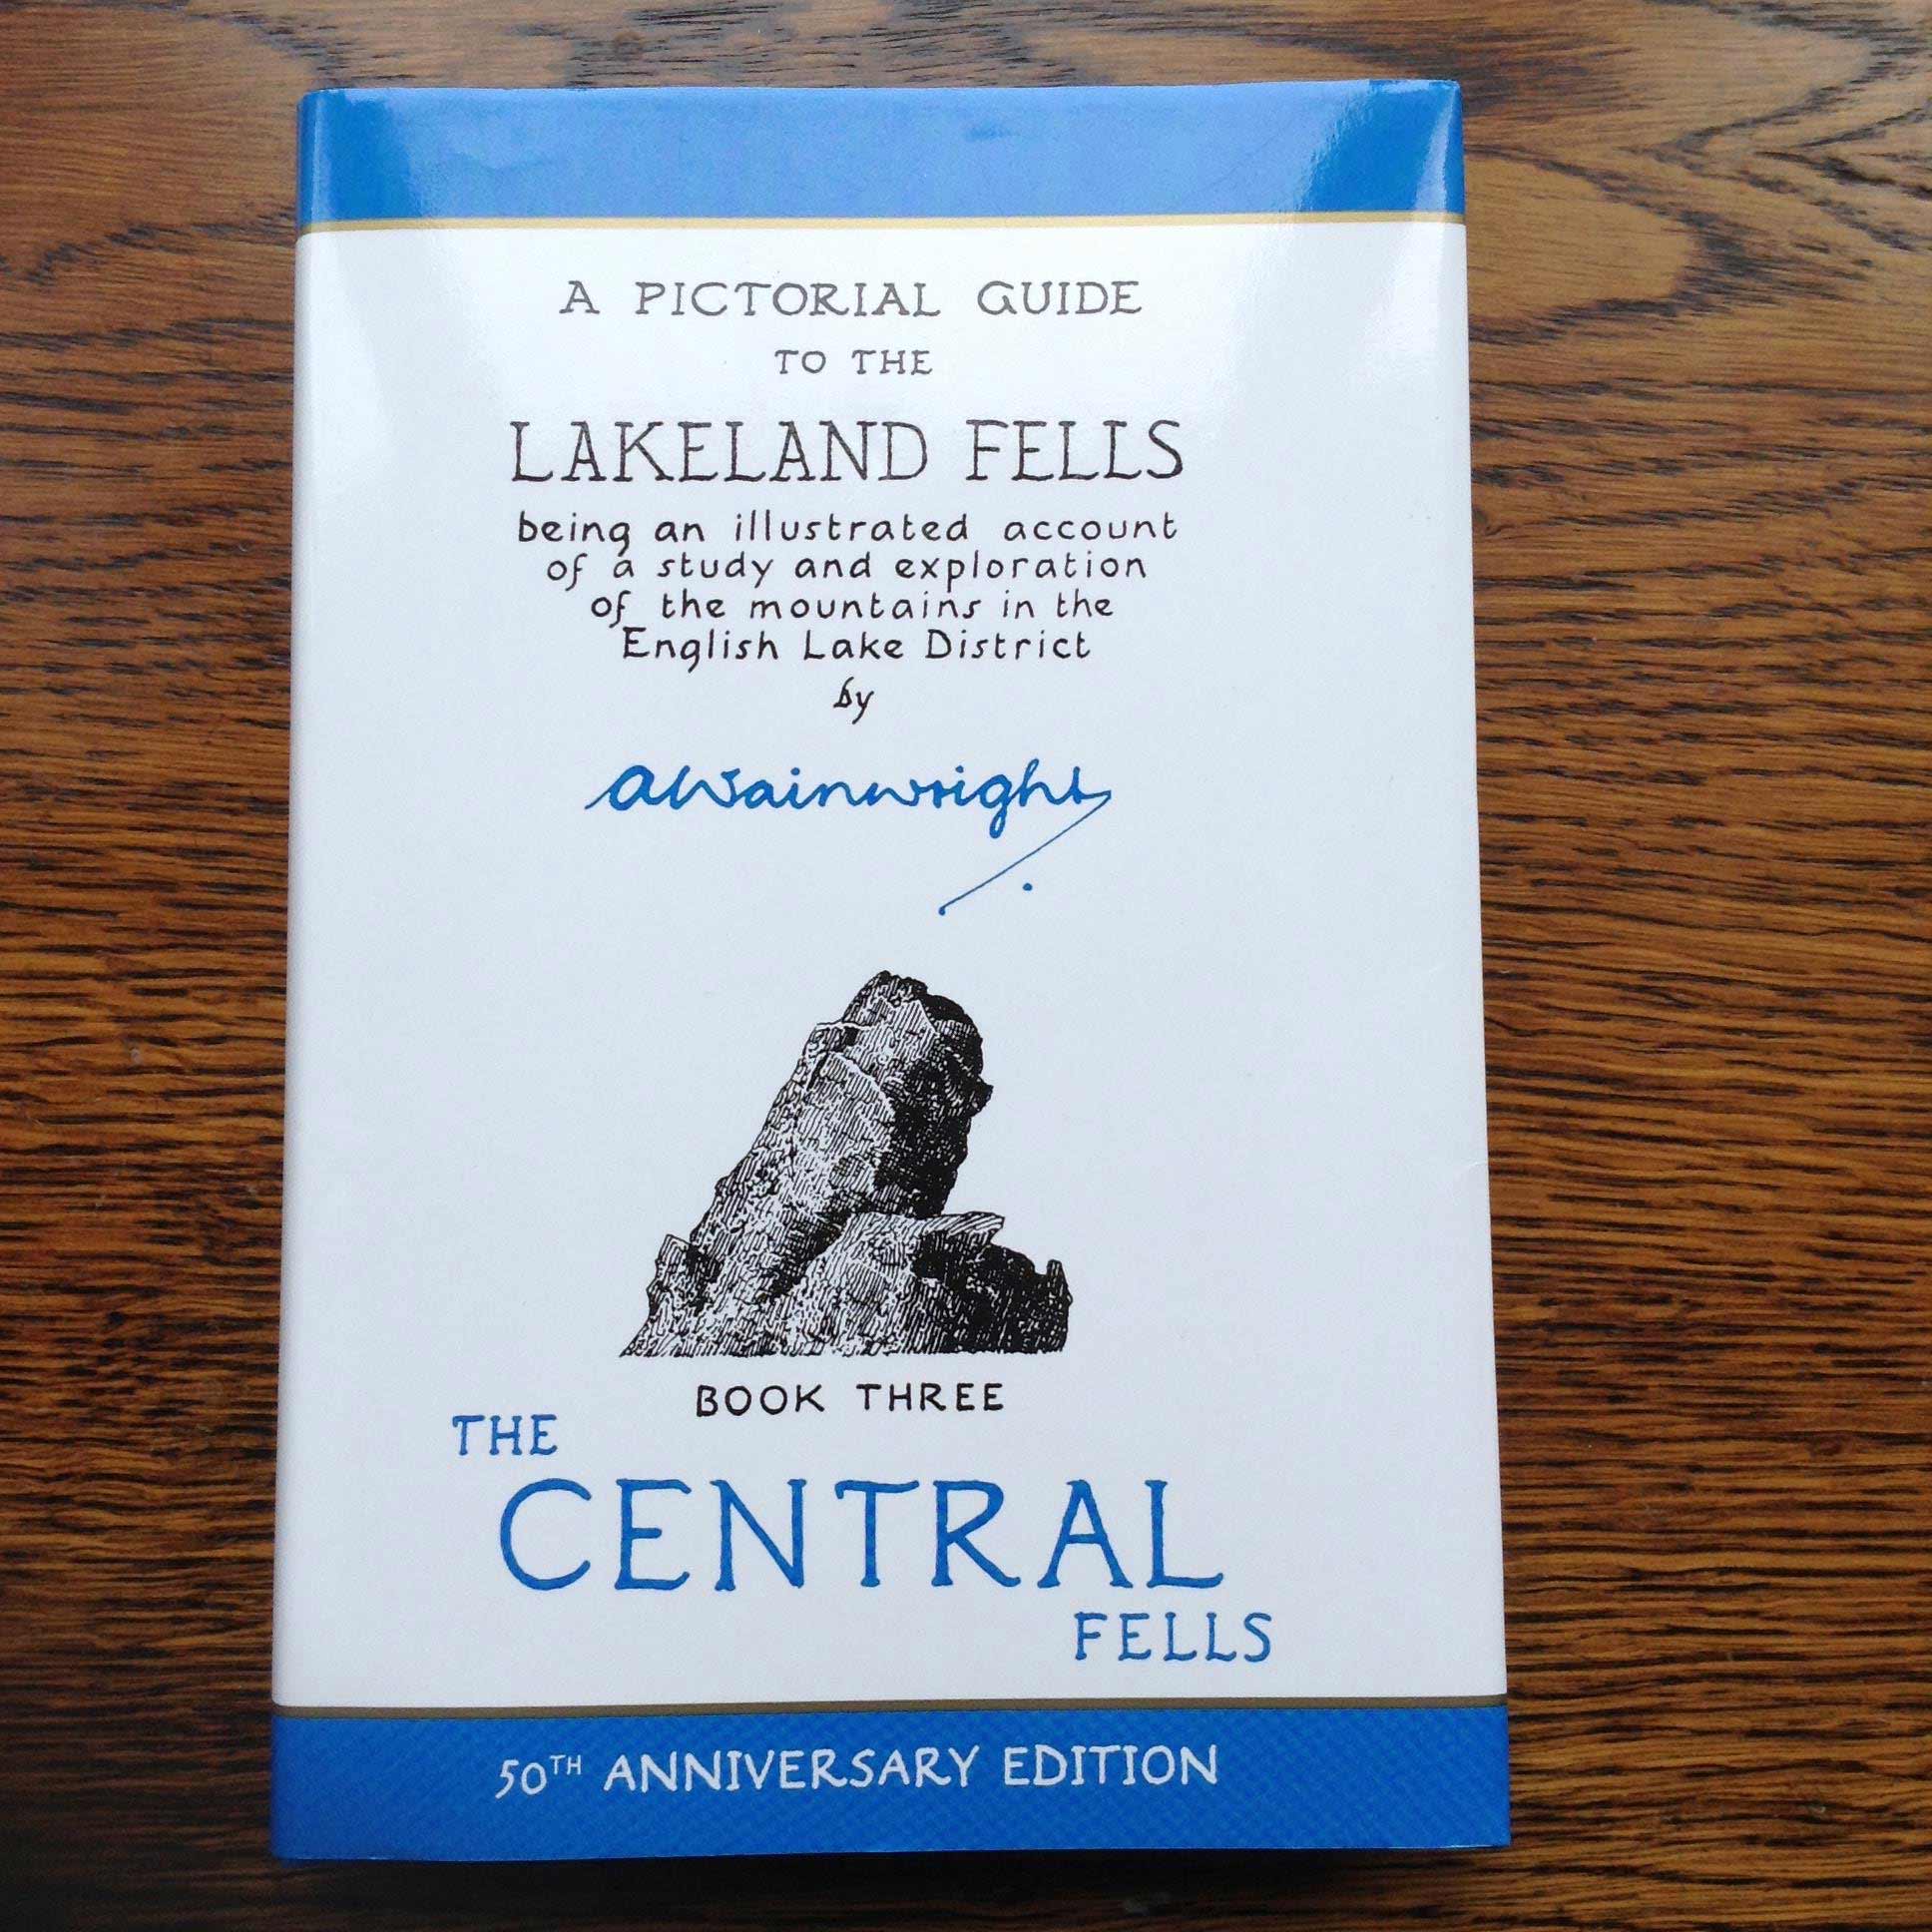 The Lakeland Fells book